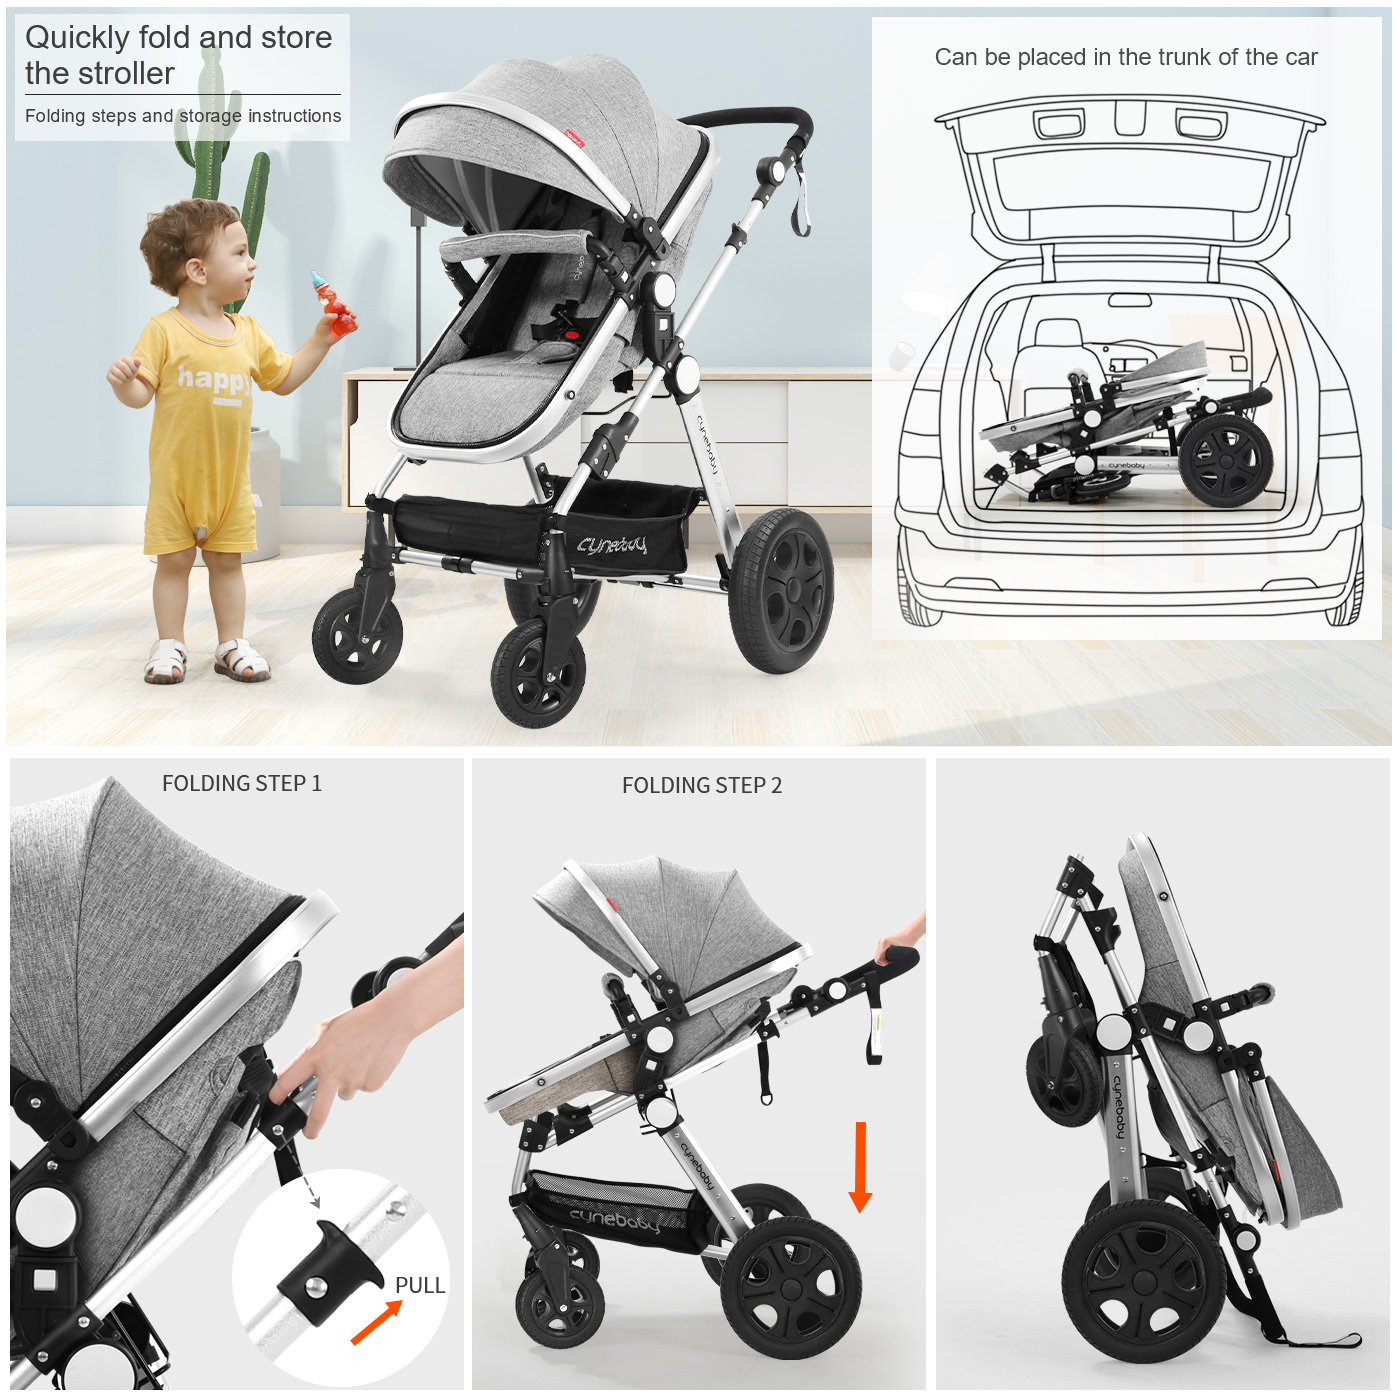 Cynebaby Newborn Infant Toddler Baby Stroller for Newborn Baby, Gray - image 3 of 9